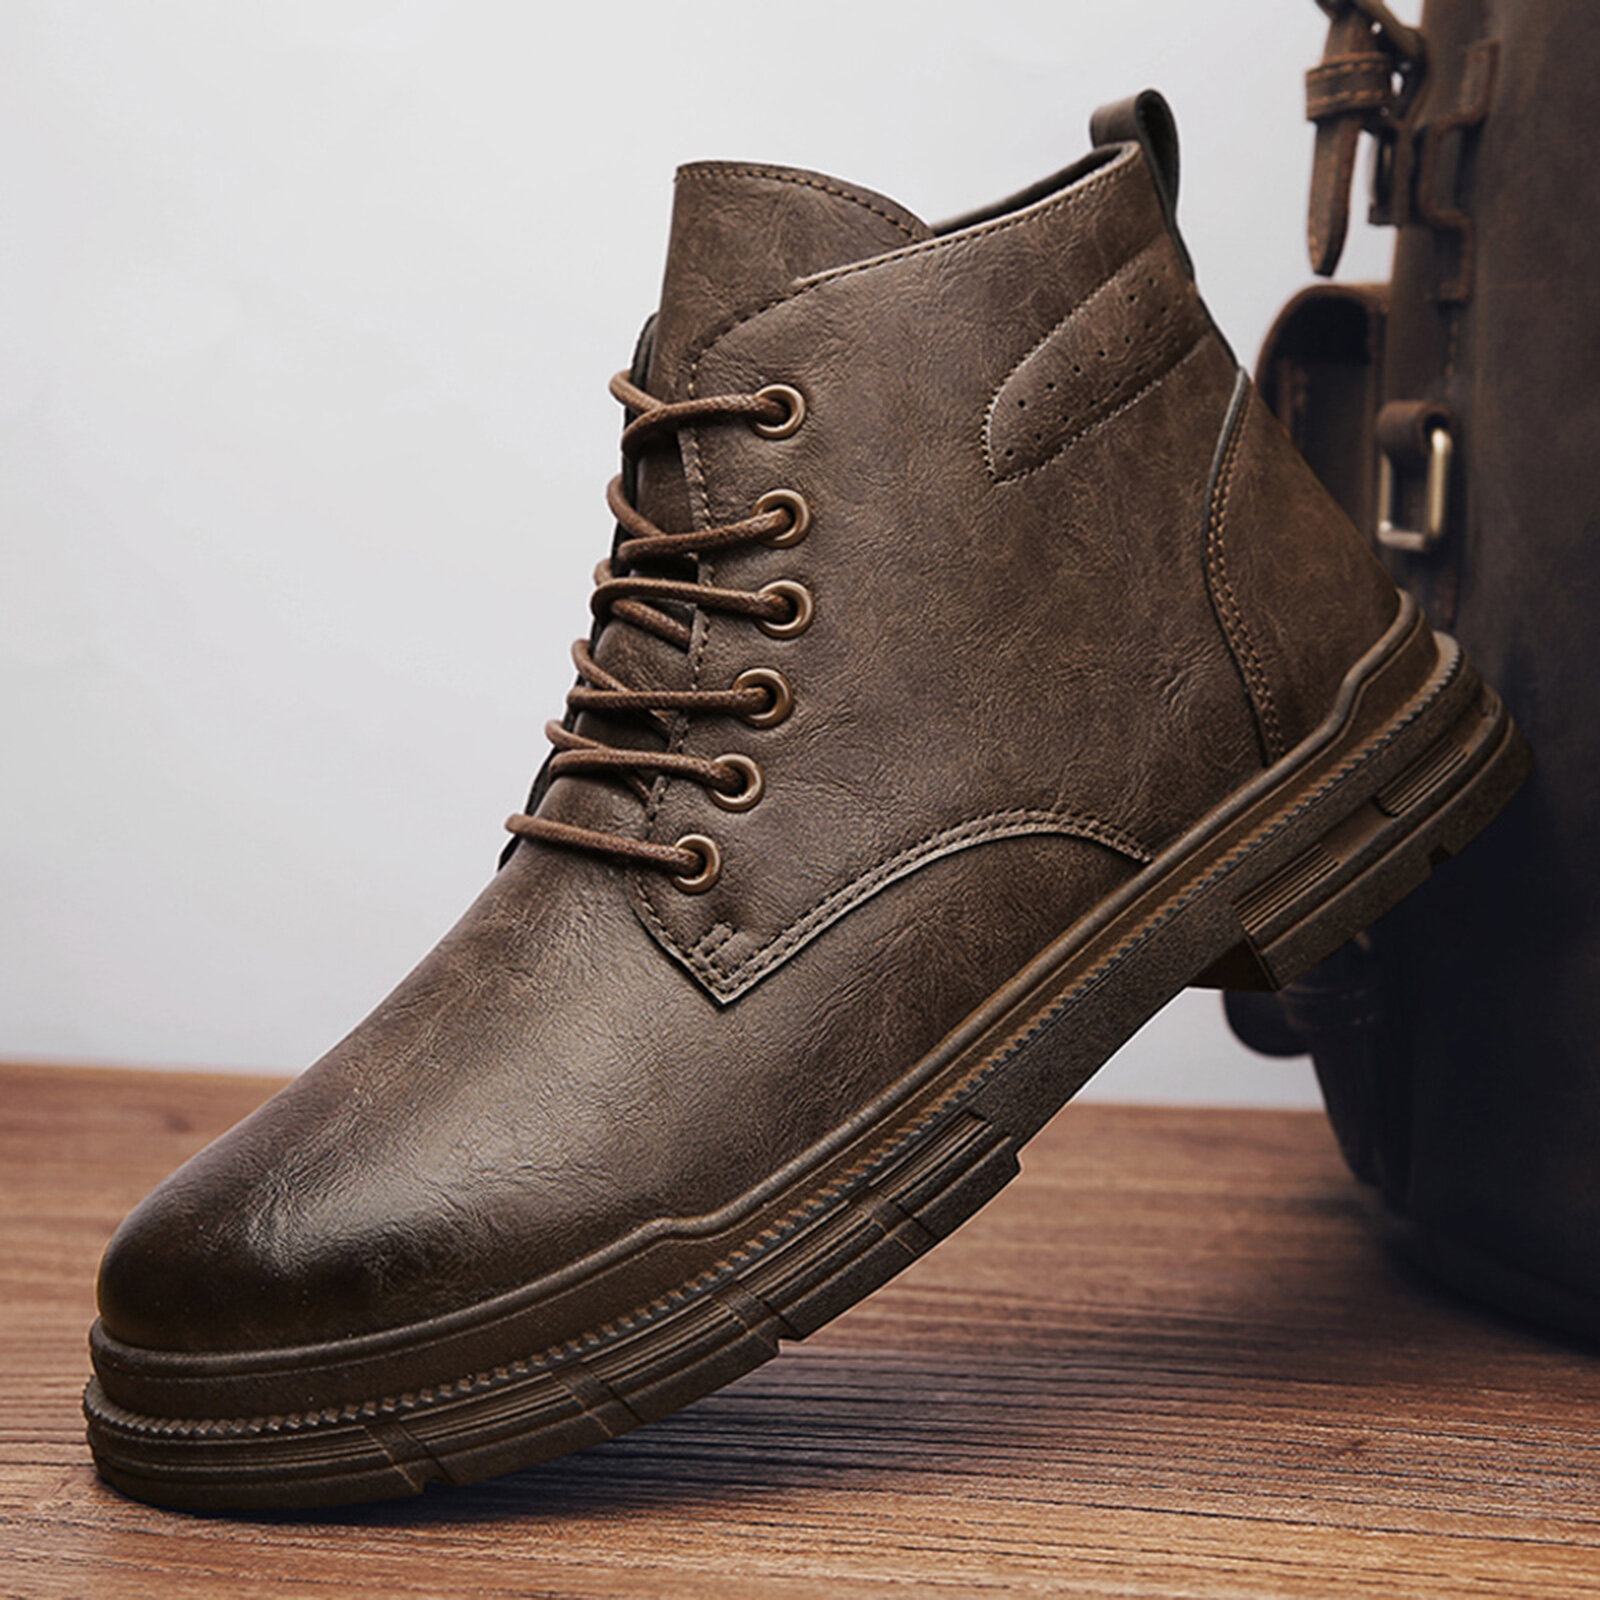 

Menico Men's Faux Leather Martin Rubber Sole Soft Non-Slip Lace-Up Boots